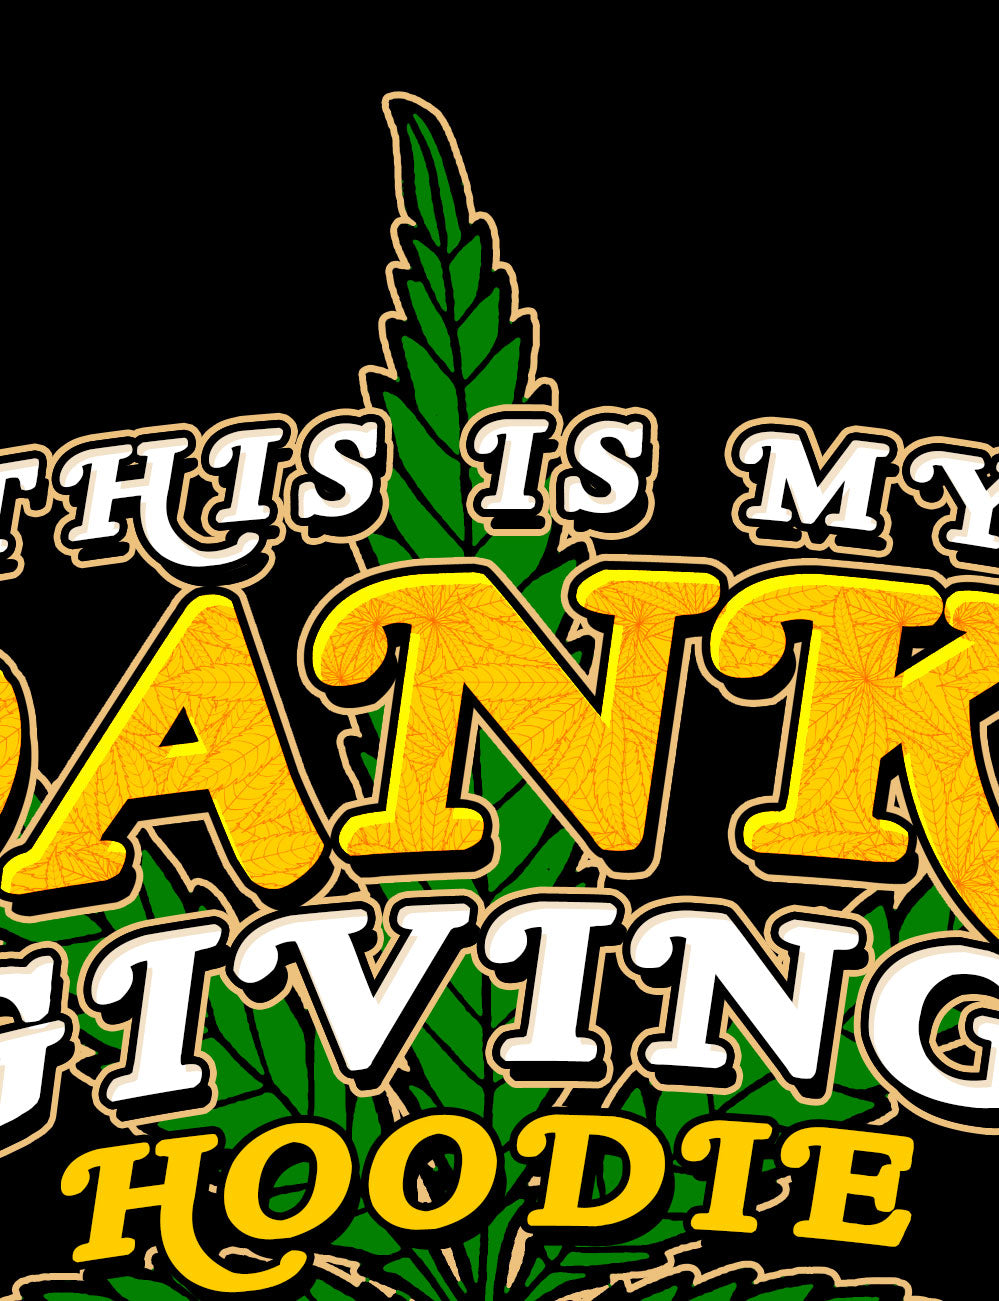 StonerDays Danksgiving Hoodie close-up showcasing vibrant cannabis leaf design and bold text.